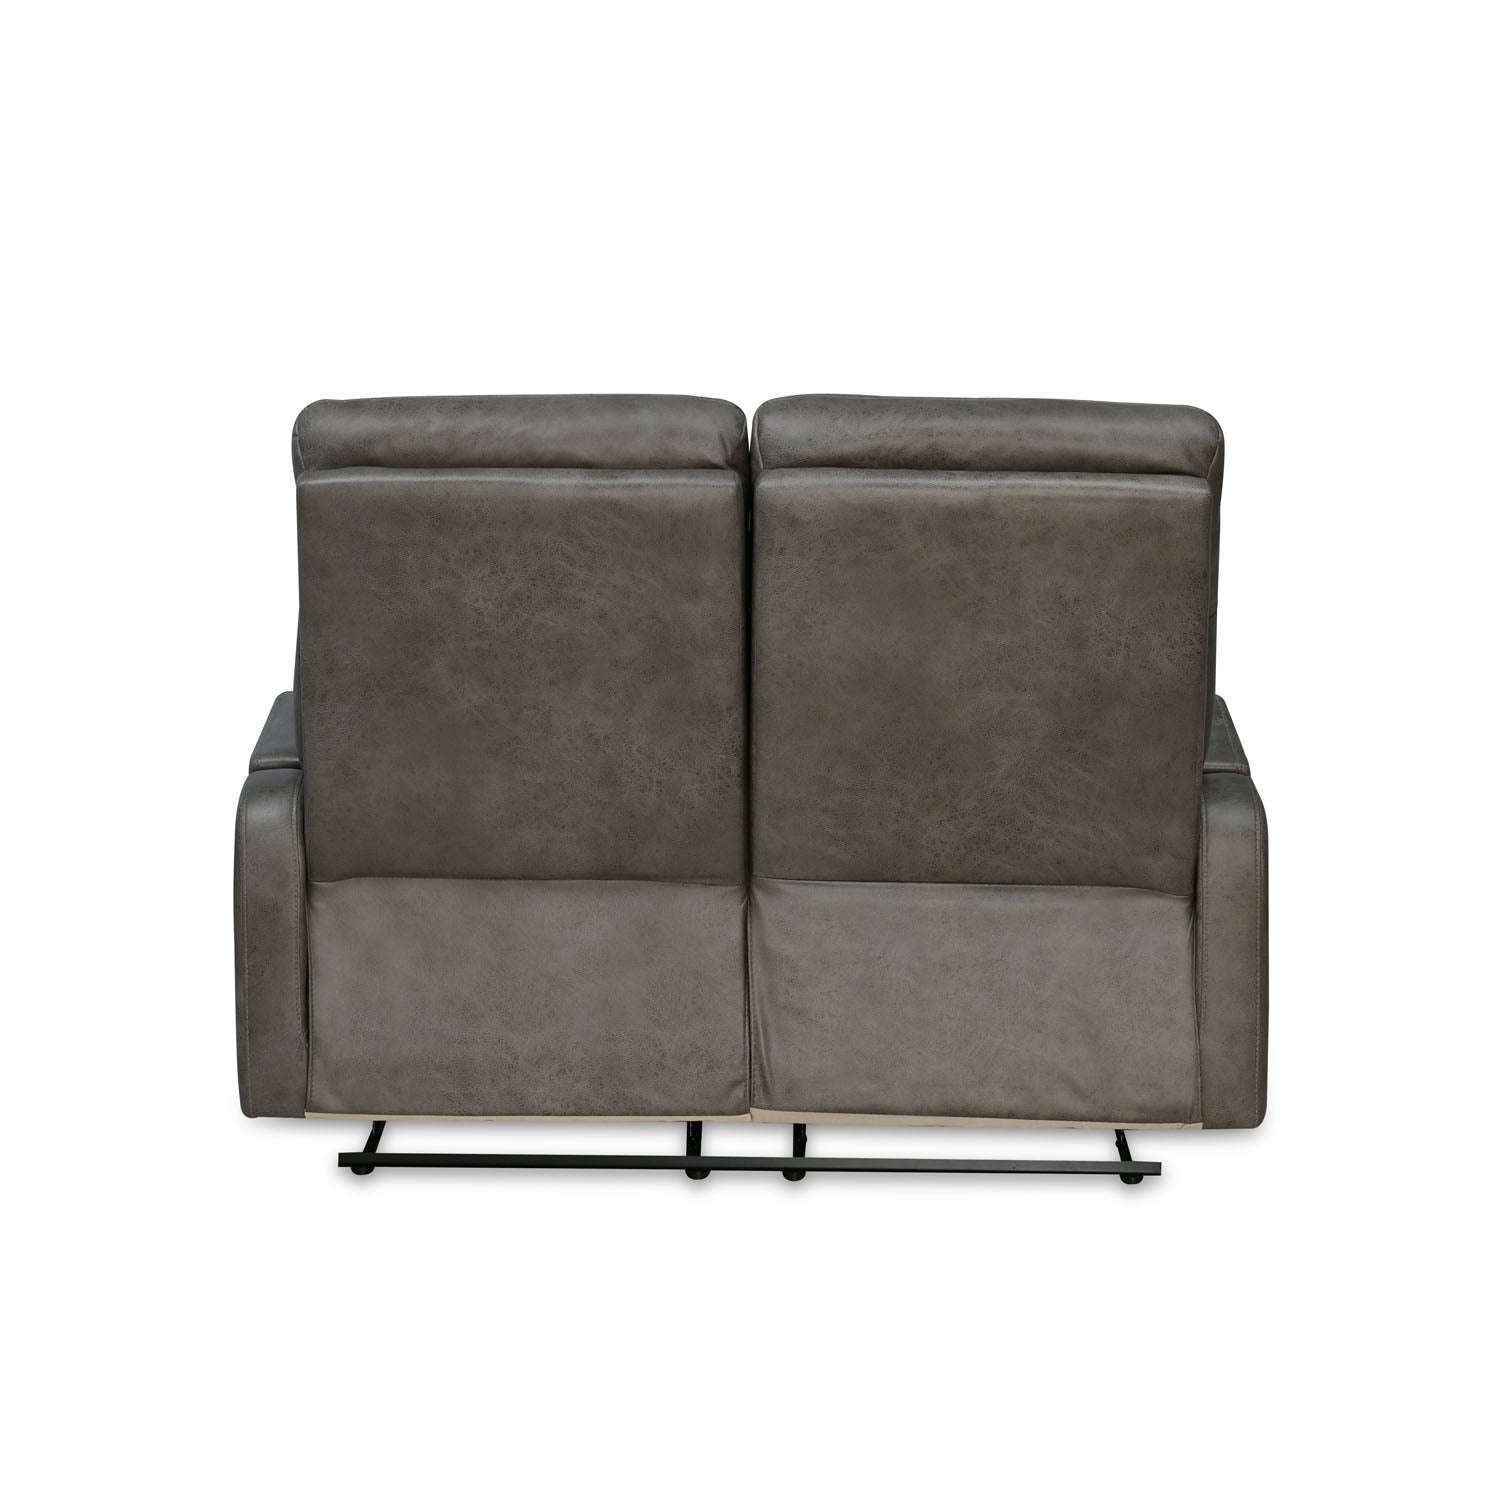 Woodbridge 2 Seater Fabric Recliner (Grey)